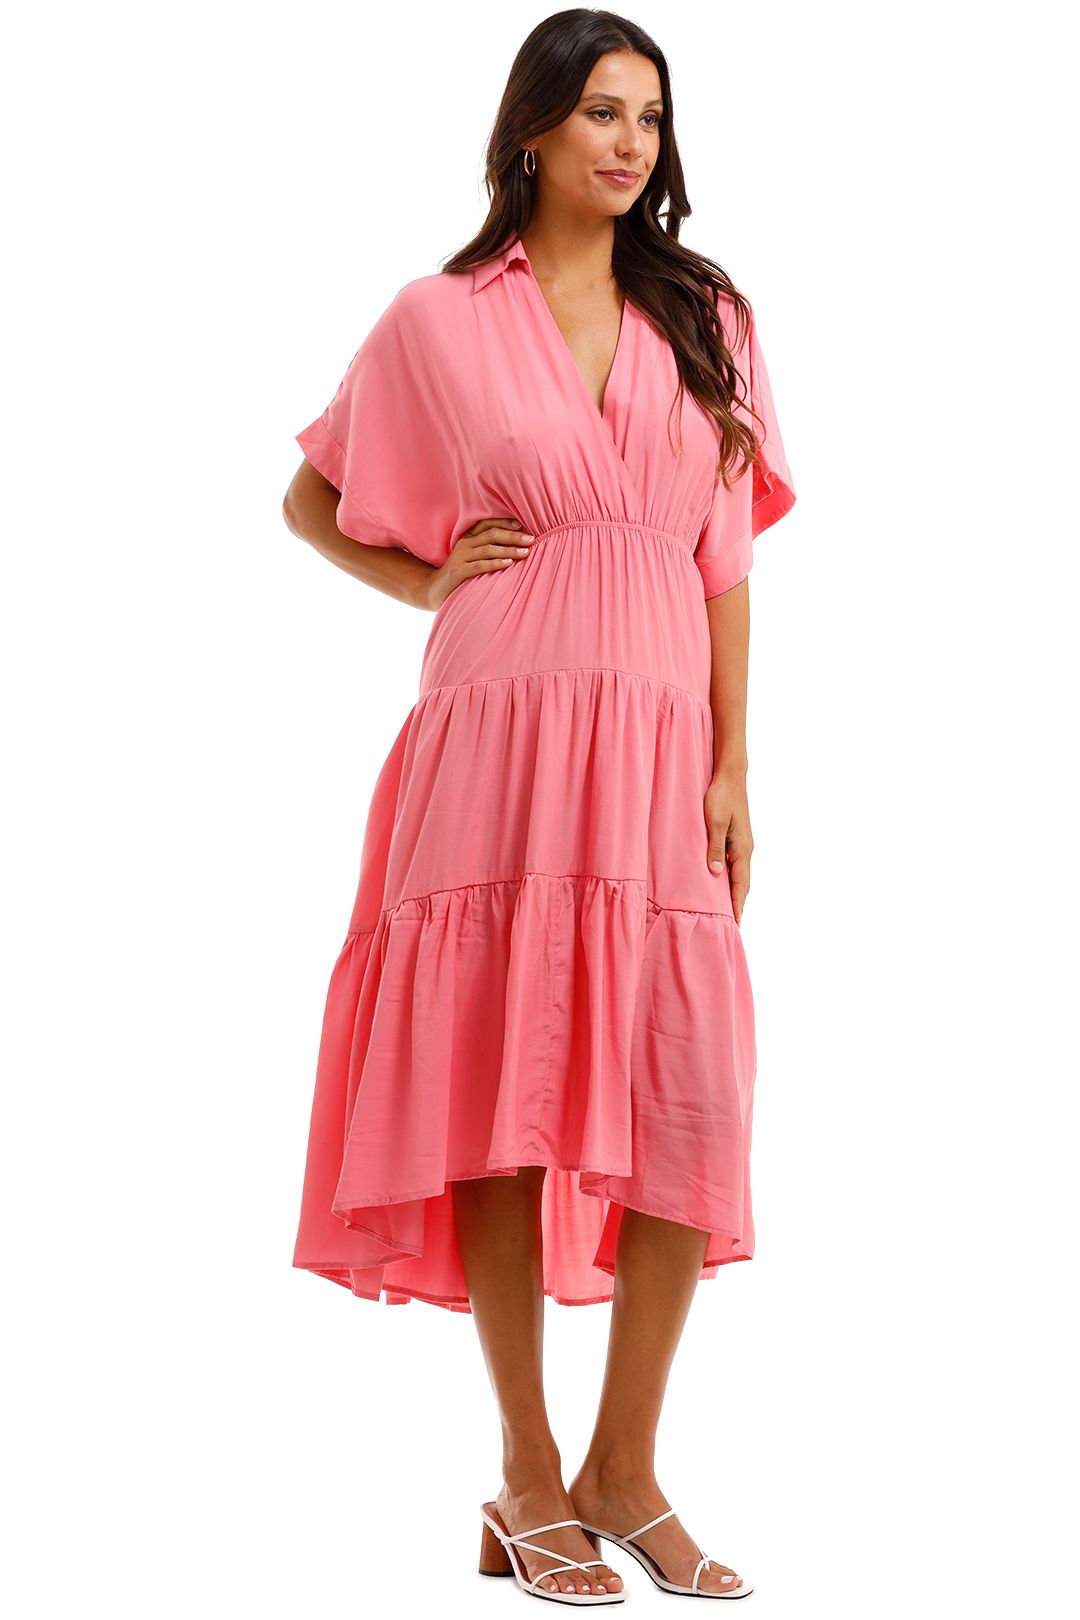 Sheike Sundays Dress Pink Tiered Skirt